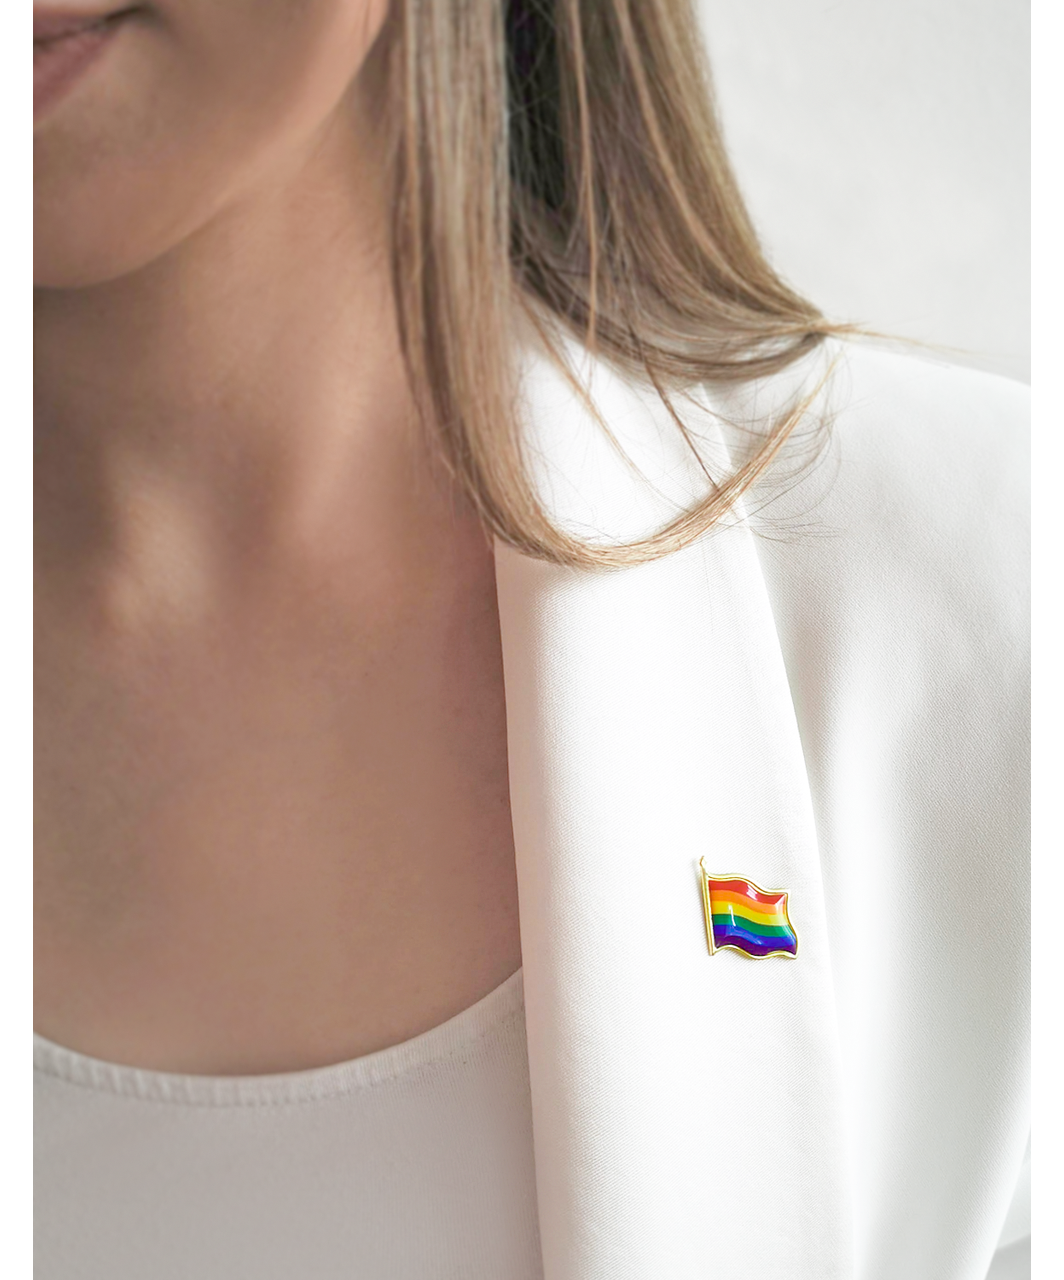 Rainbow Pride LGBT Flag Enamel Lapel Pin